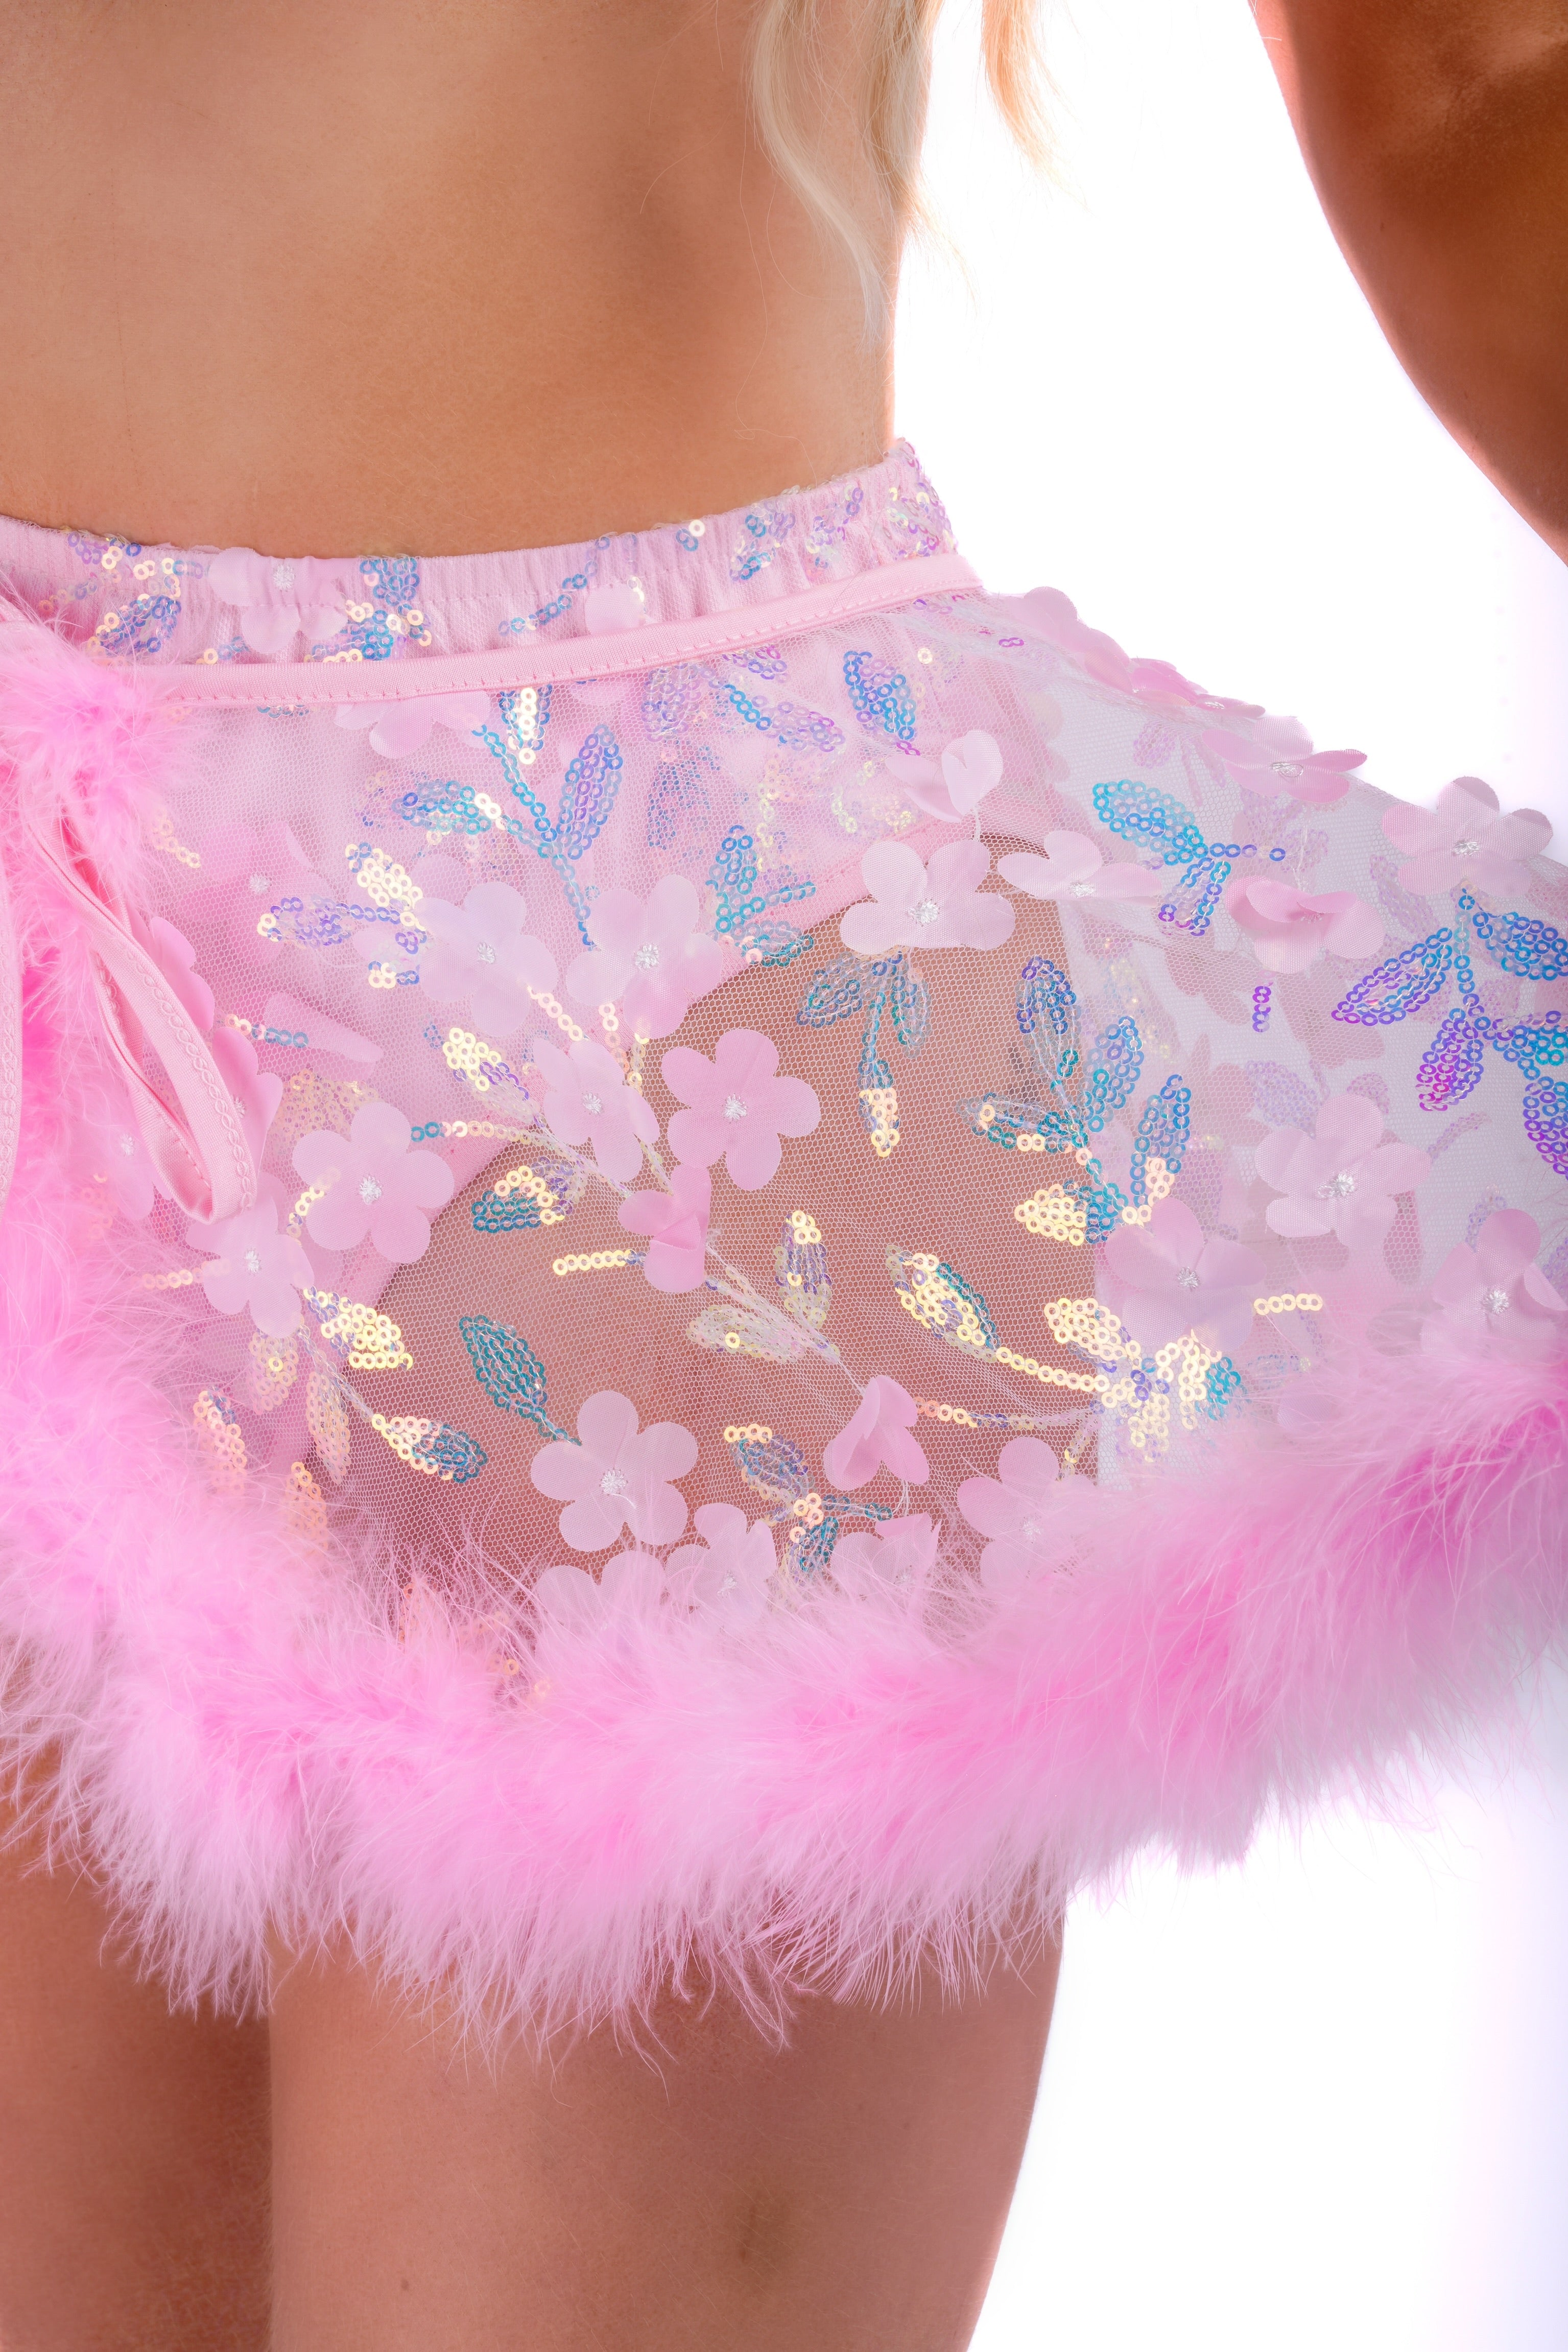 Iridescent Pink Fairy Blossom Skirt